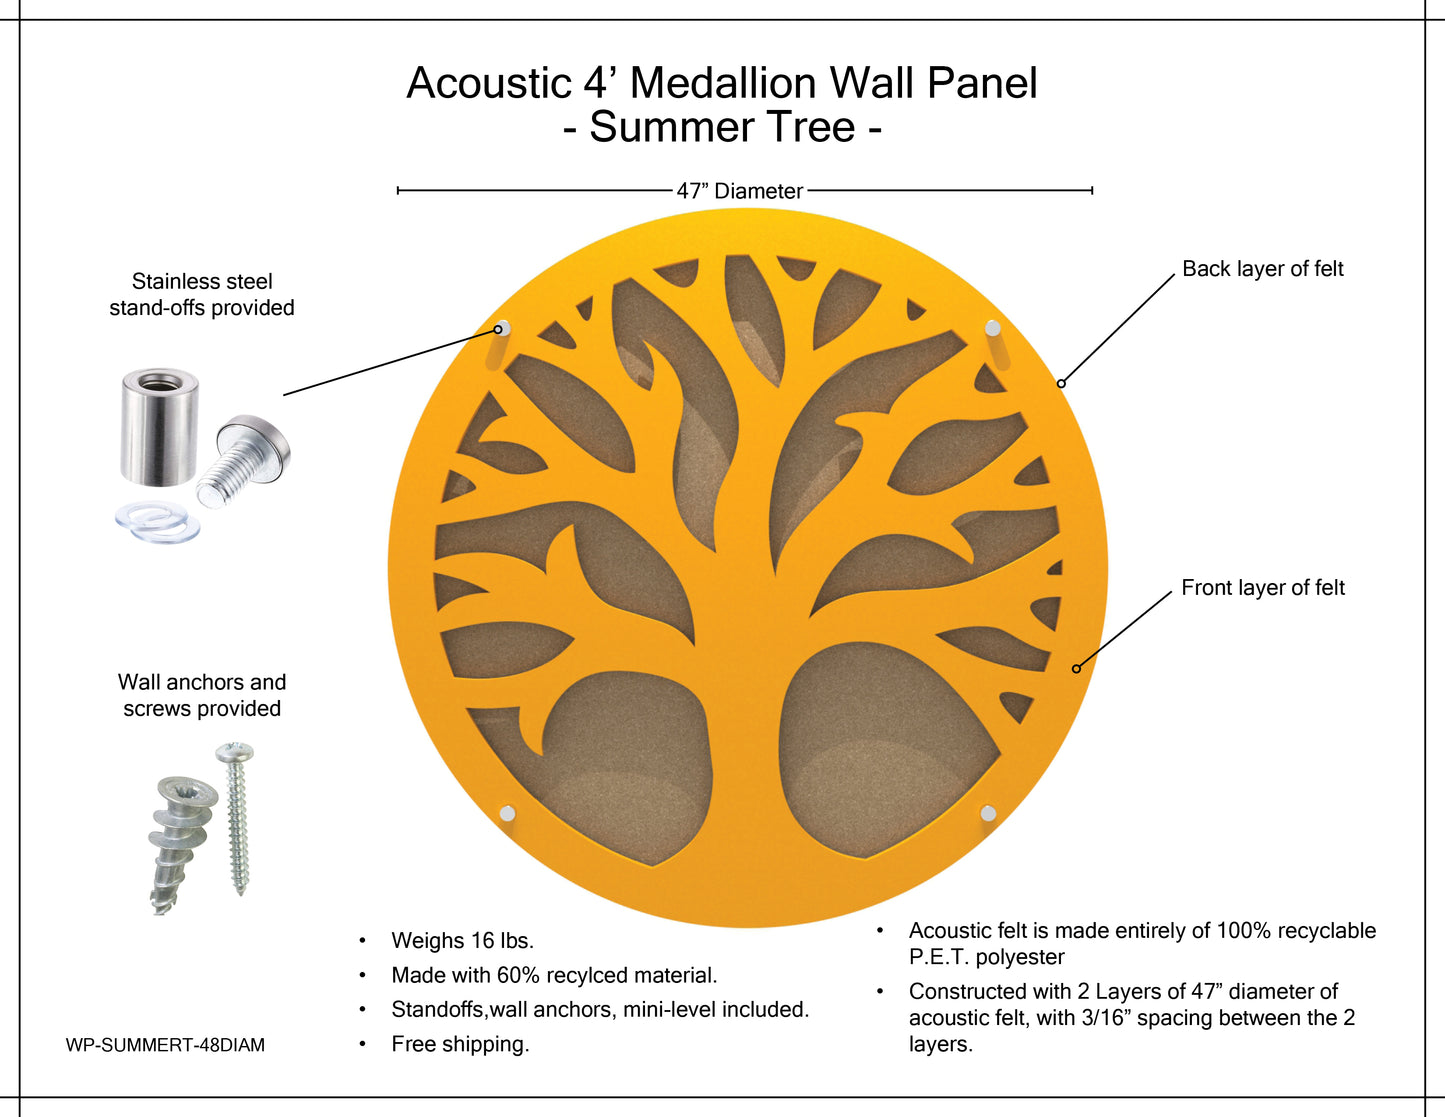 Medallion Acoustic Wall Panel - Summer Tree